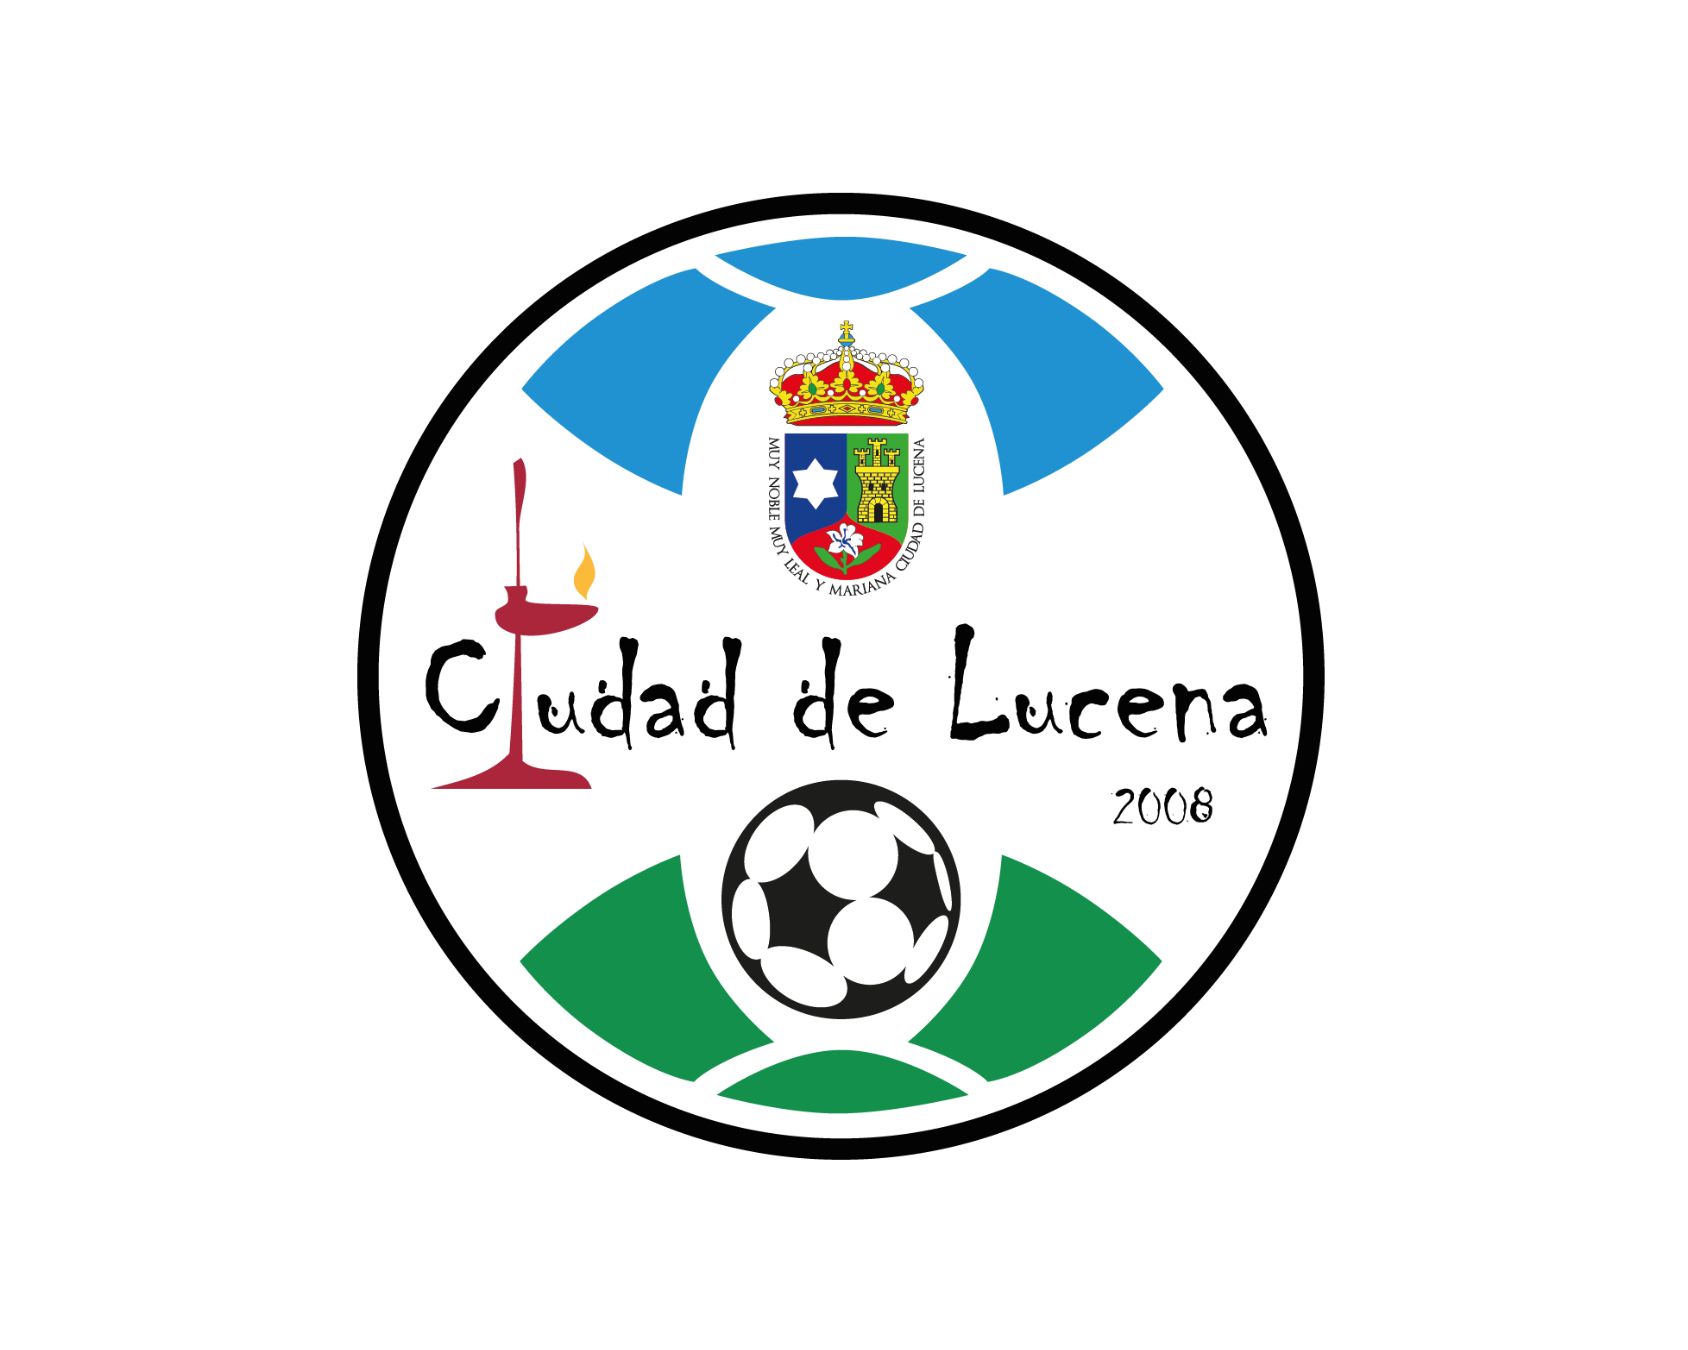 cd-ciudad-de-lucena-13-football-club-facts